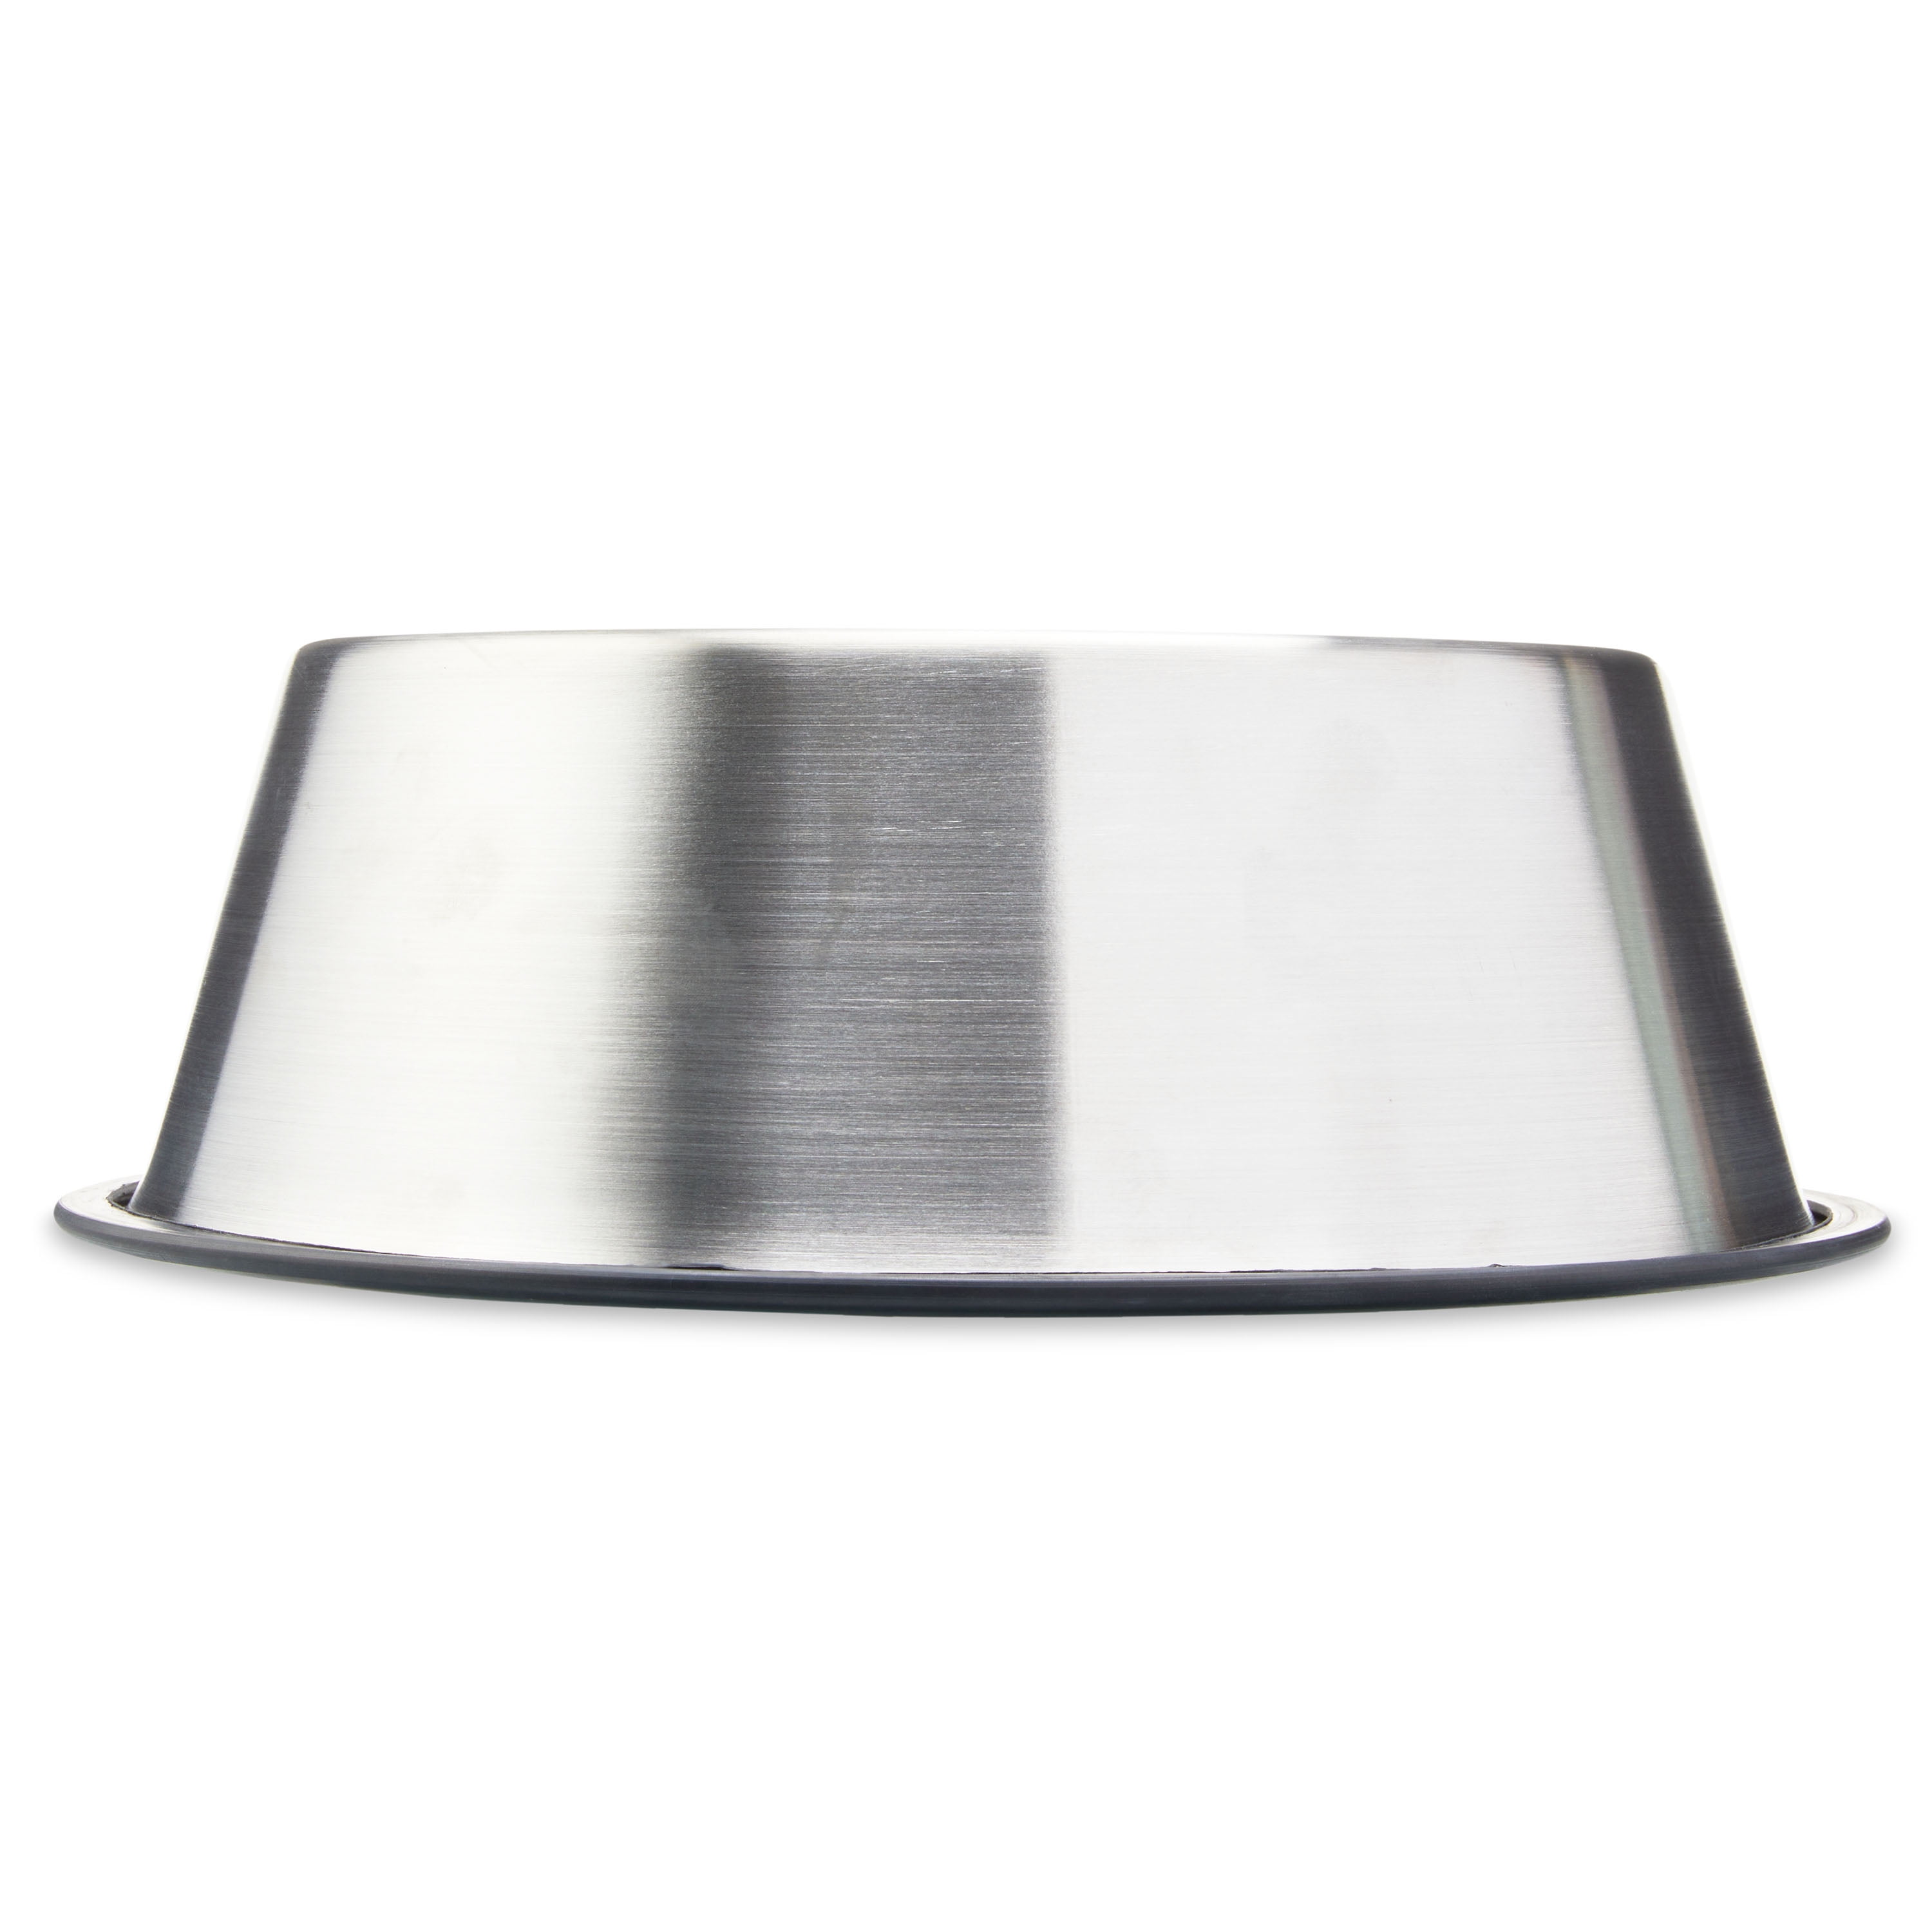 Platinum Pets® 64oz Stainless Steel Dog Bowl